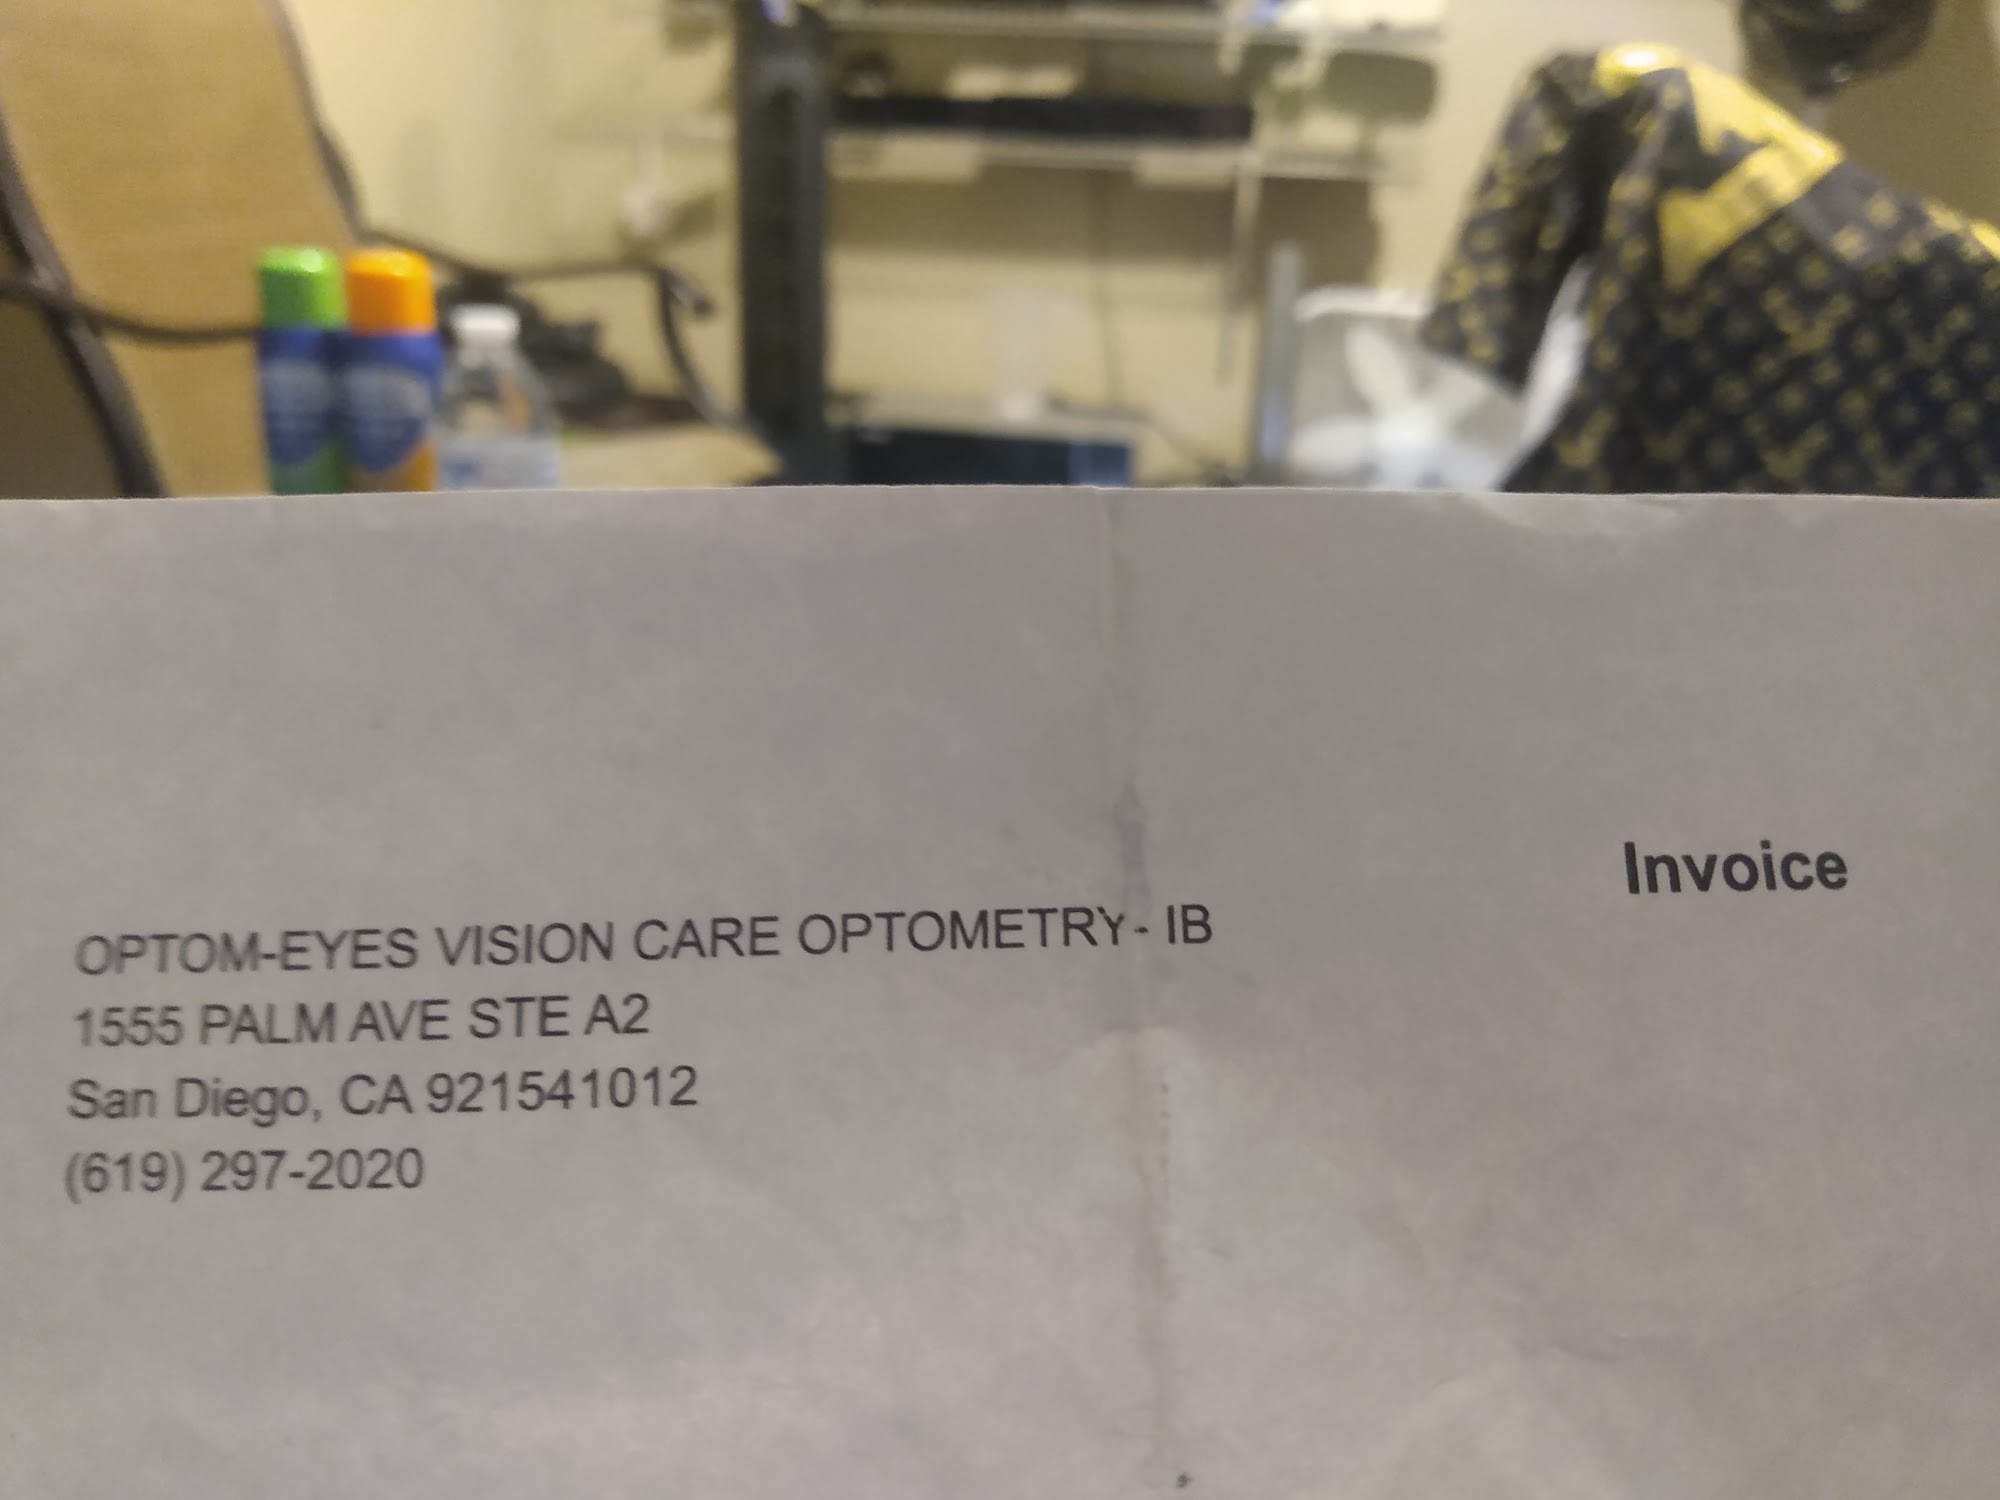 Optom-Eyes Vision Care